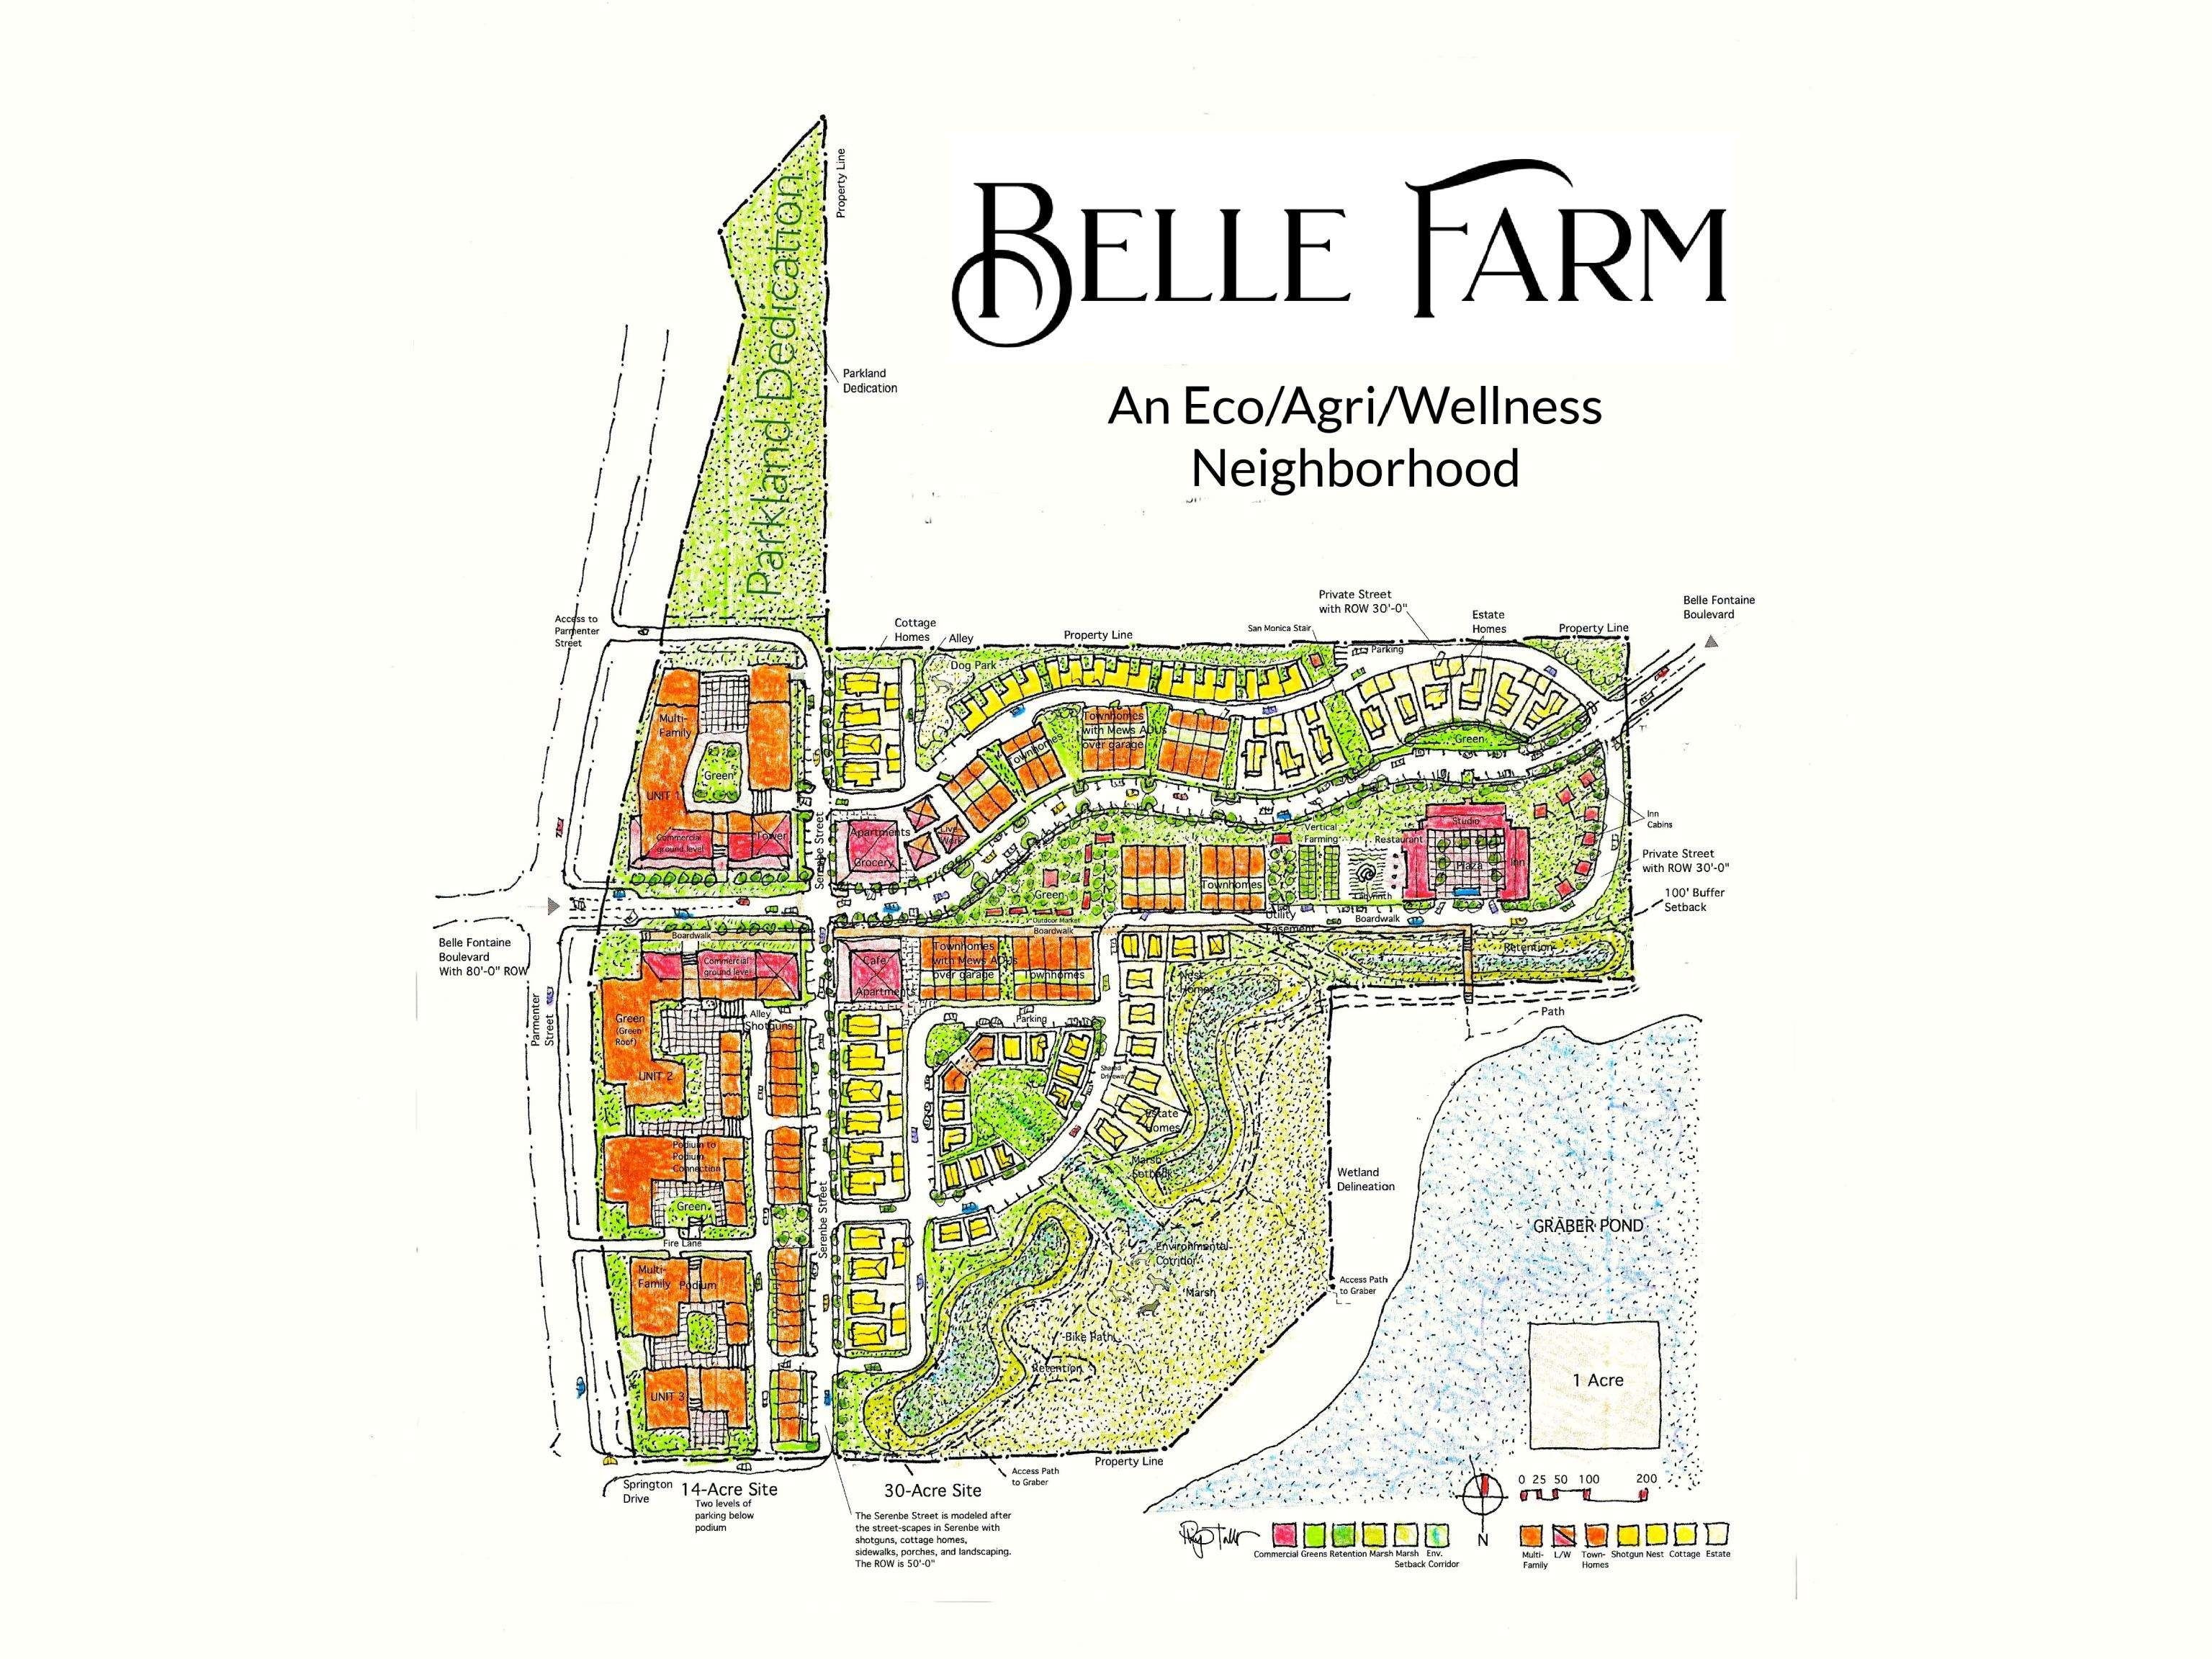 2. Lot 37 Belle Farm